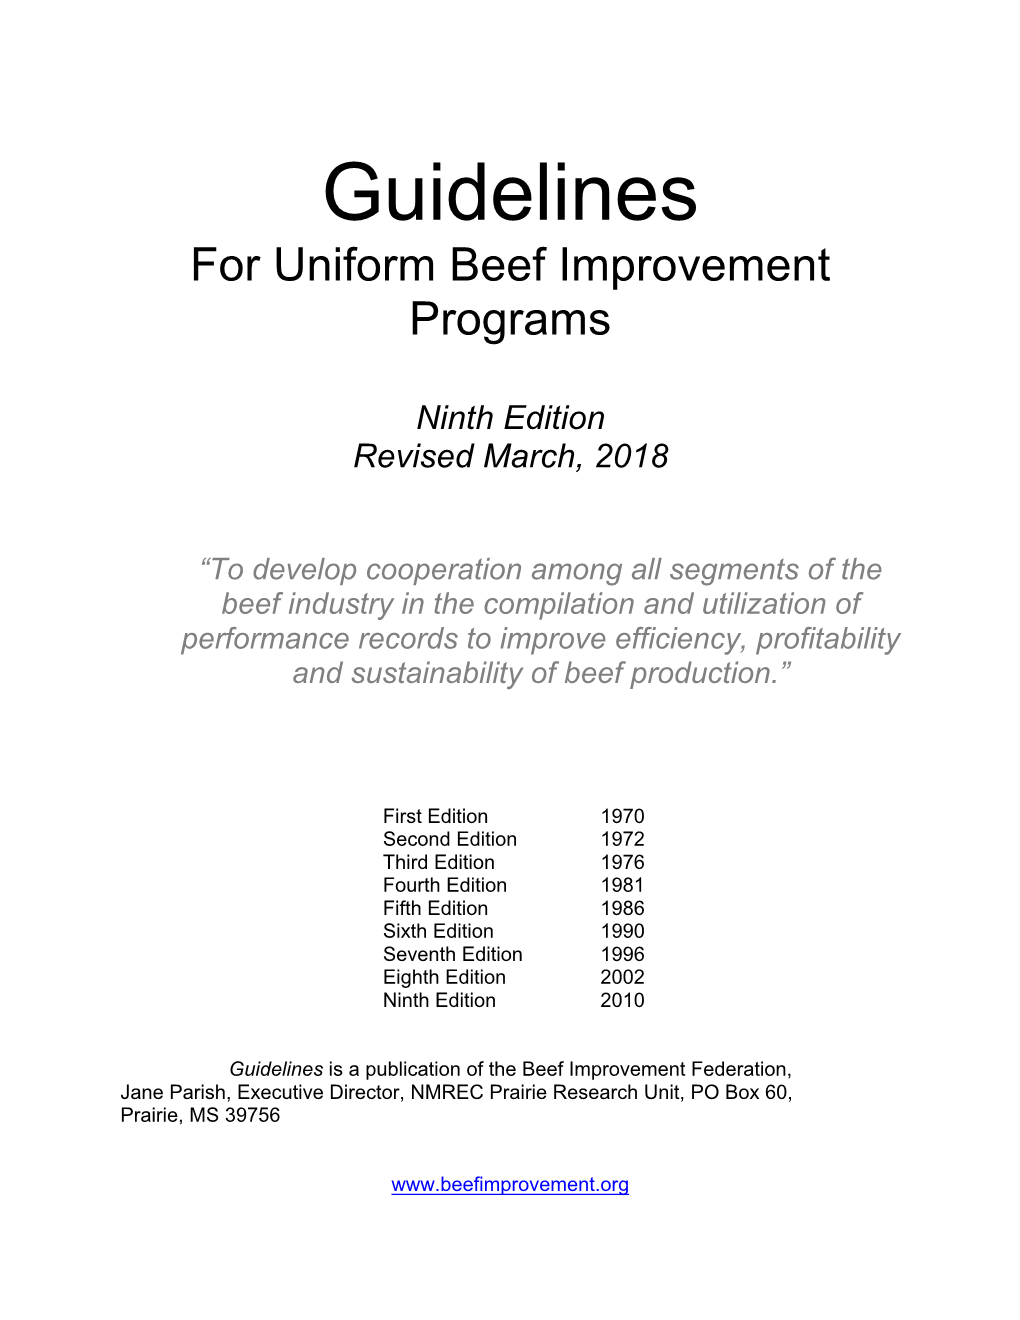 Guidelines for Uniform Beef Improvement Programs